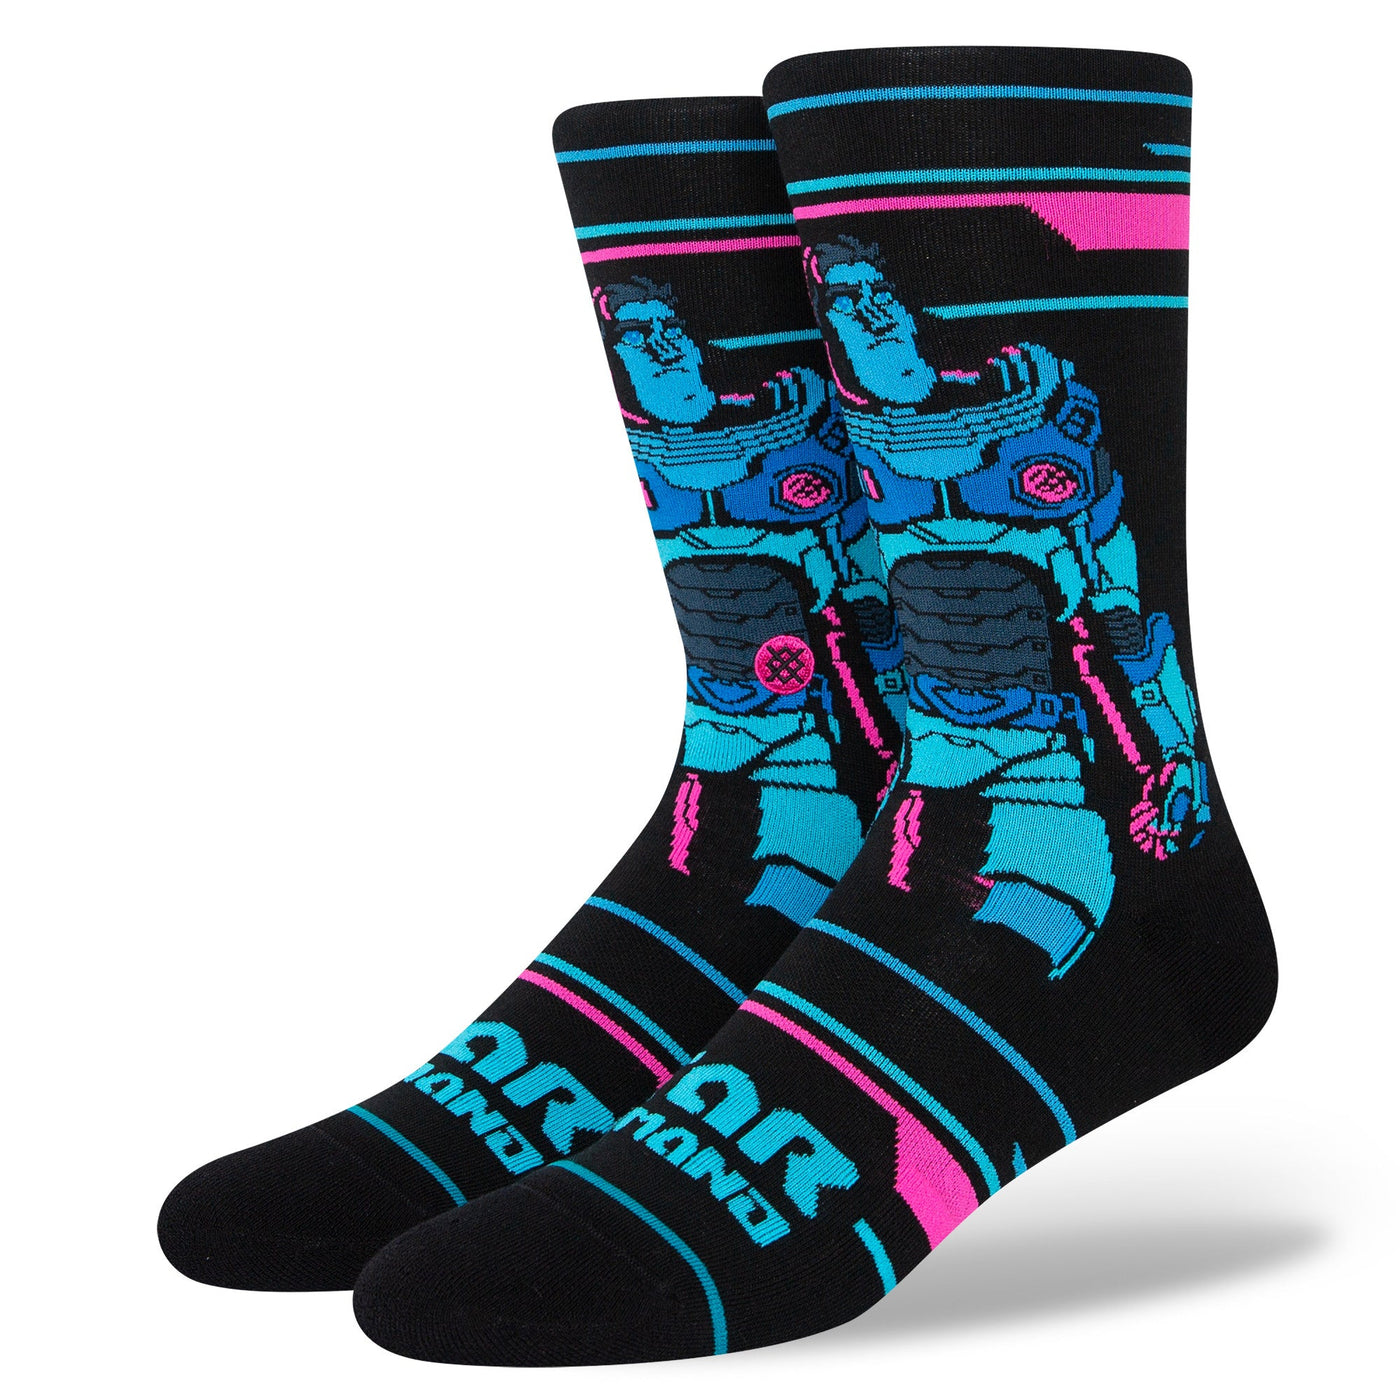 Lightyear Crew Socks | Men's - Knock Your Socks Off